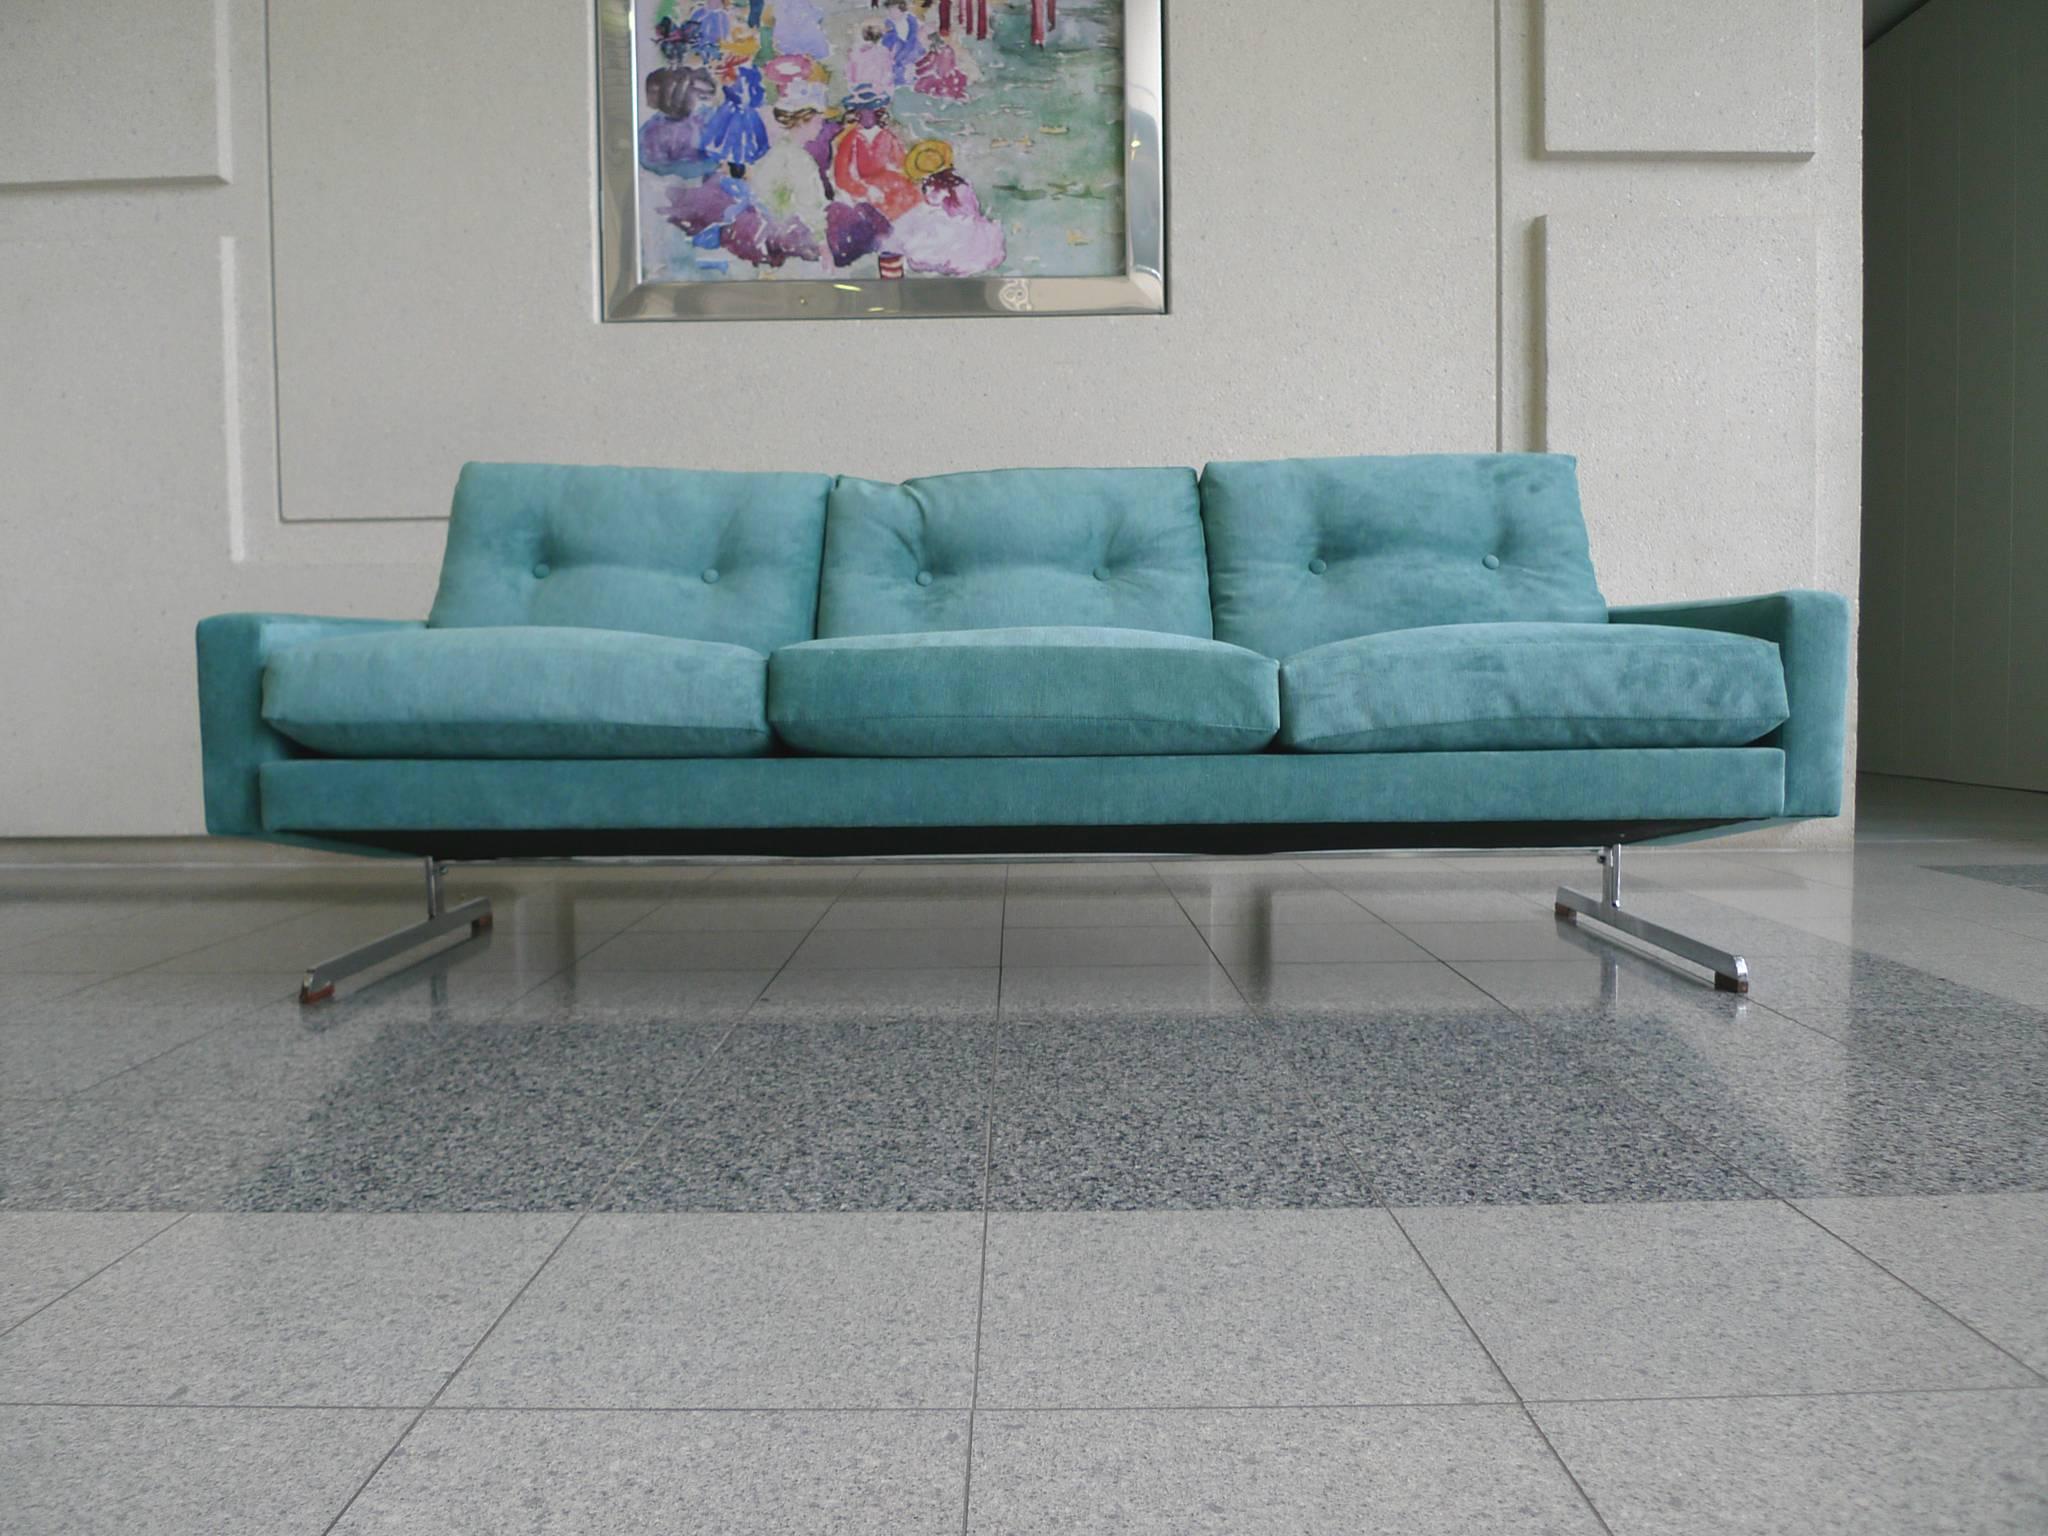 Teal Danish Modern Sofa by Johannes Andersen 1